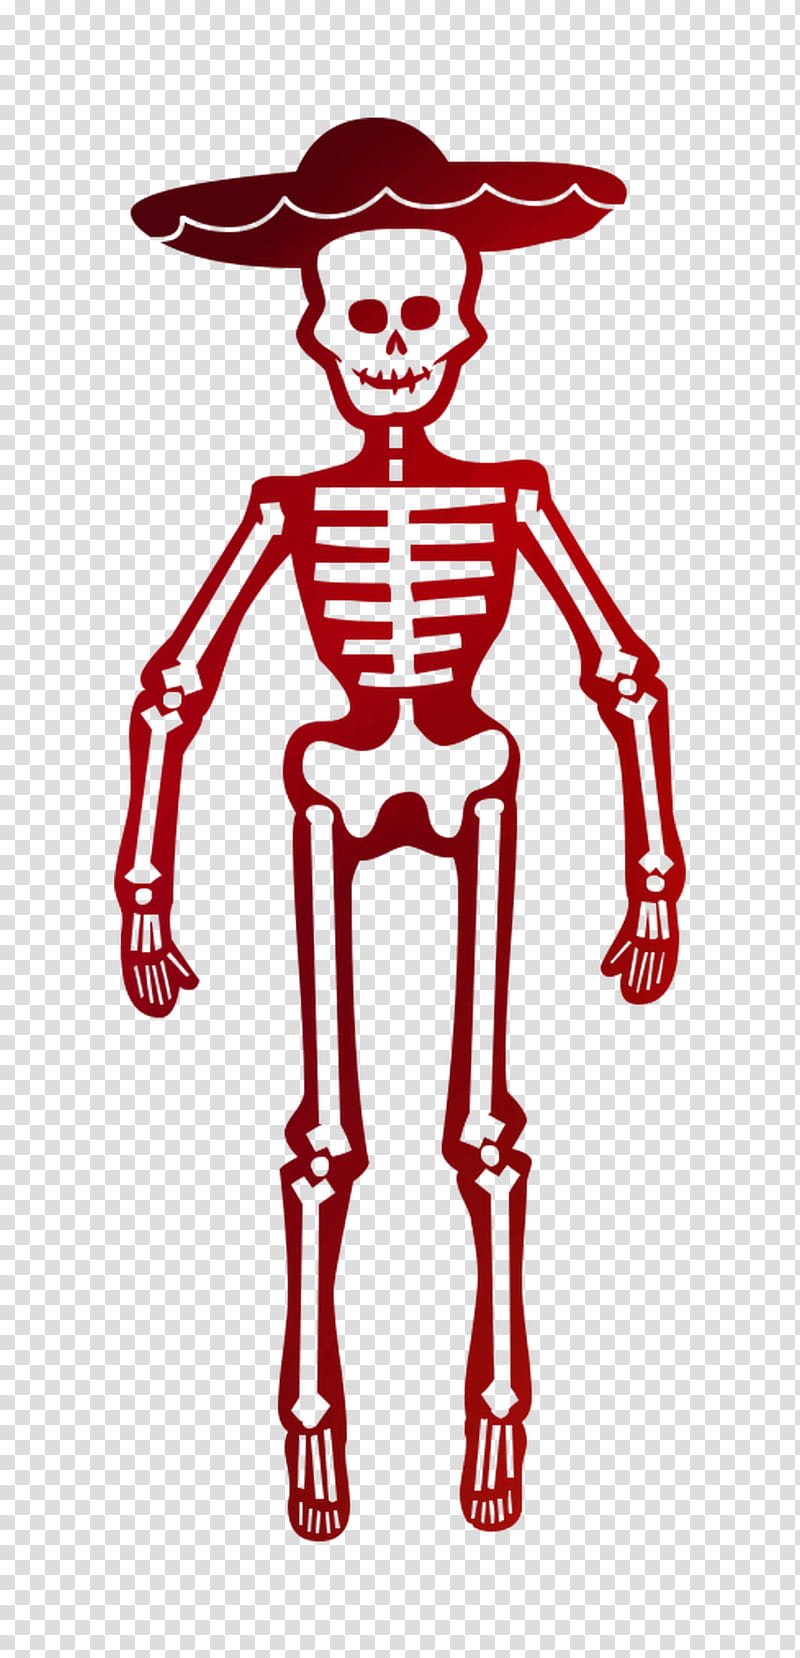 Human Skull Drawing, Skeleton, Bone, Line Art, Cartoon, Human Skeleton, Coloring Book, Red transparent background PNG clipart